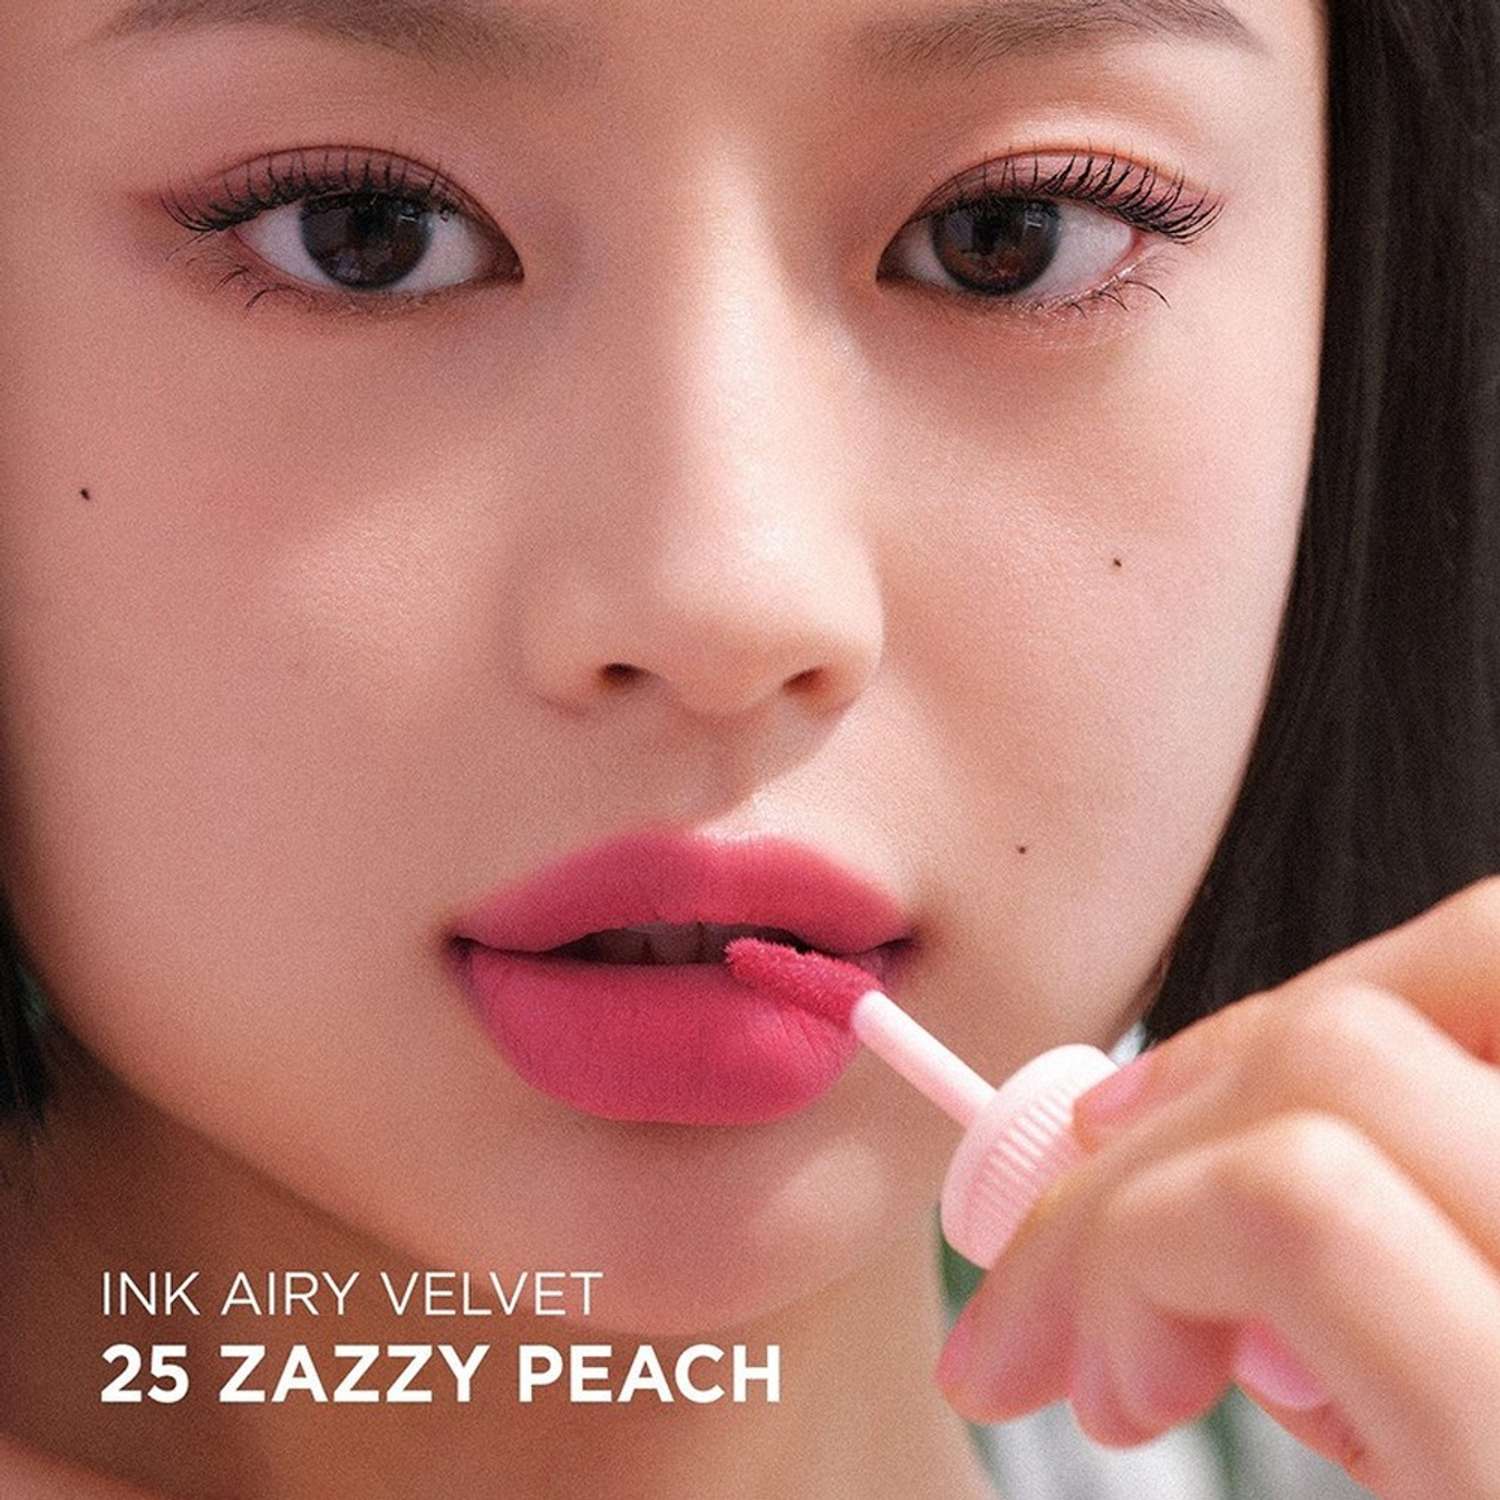 Помада для губ Peripera Ink airy velvet жидкая тон 25 zazzy peach - фото 5